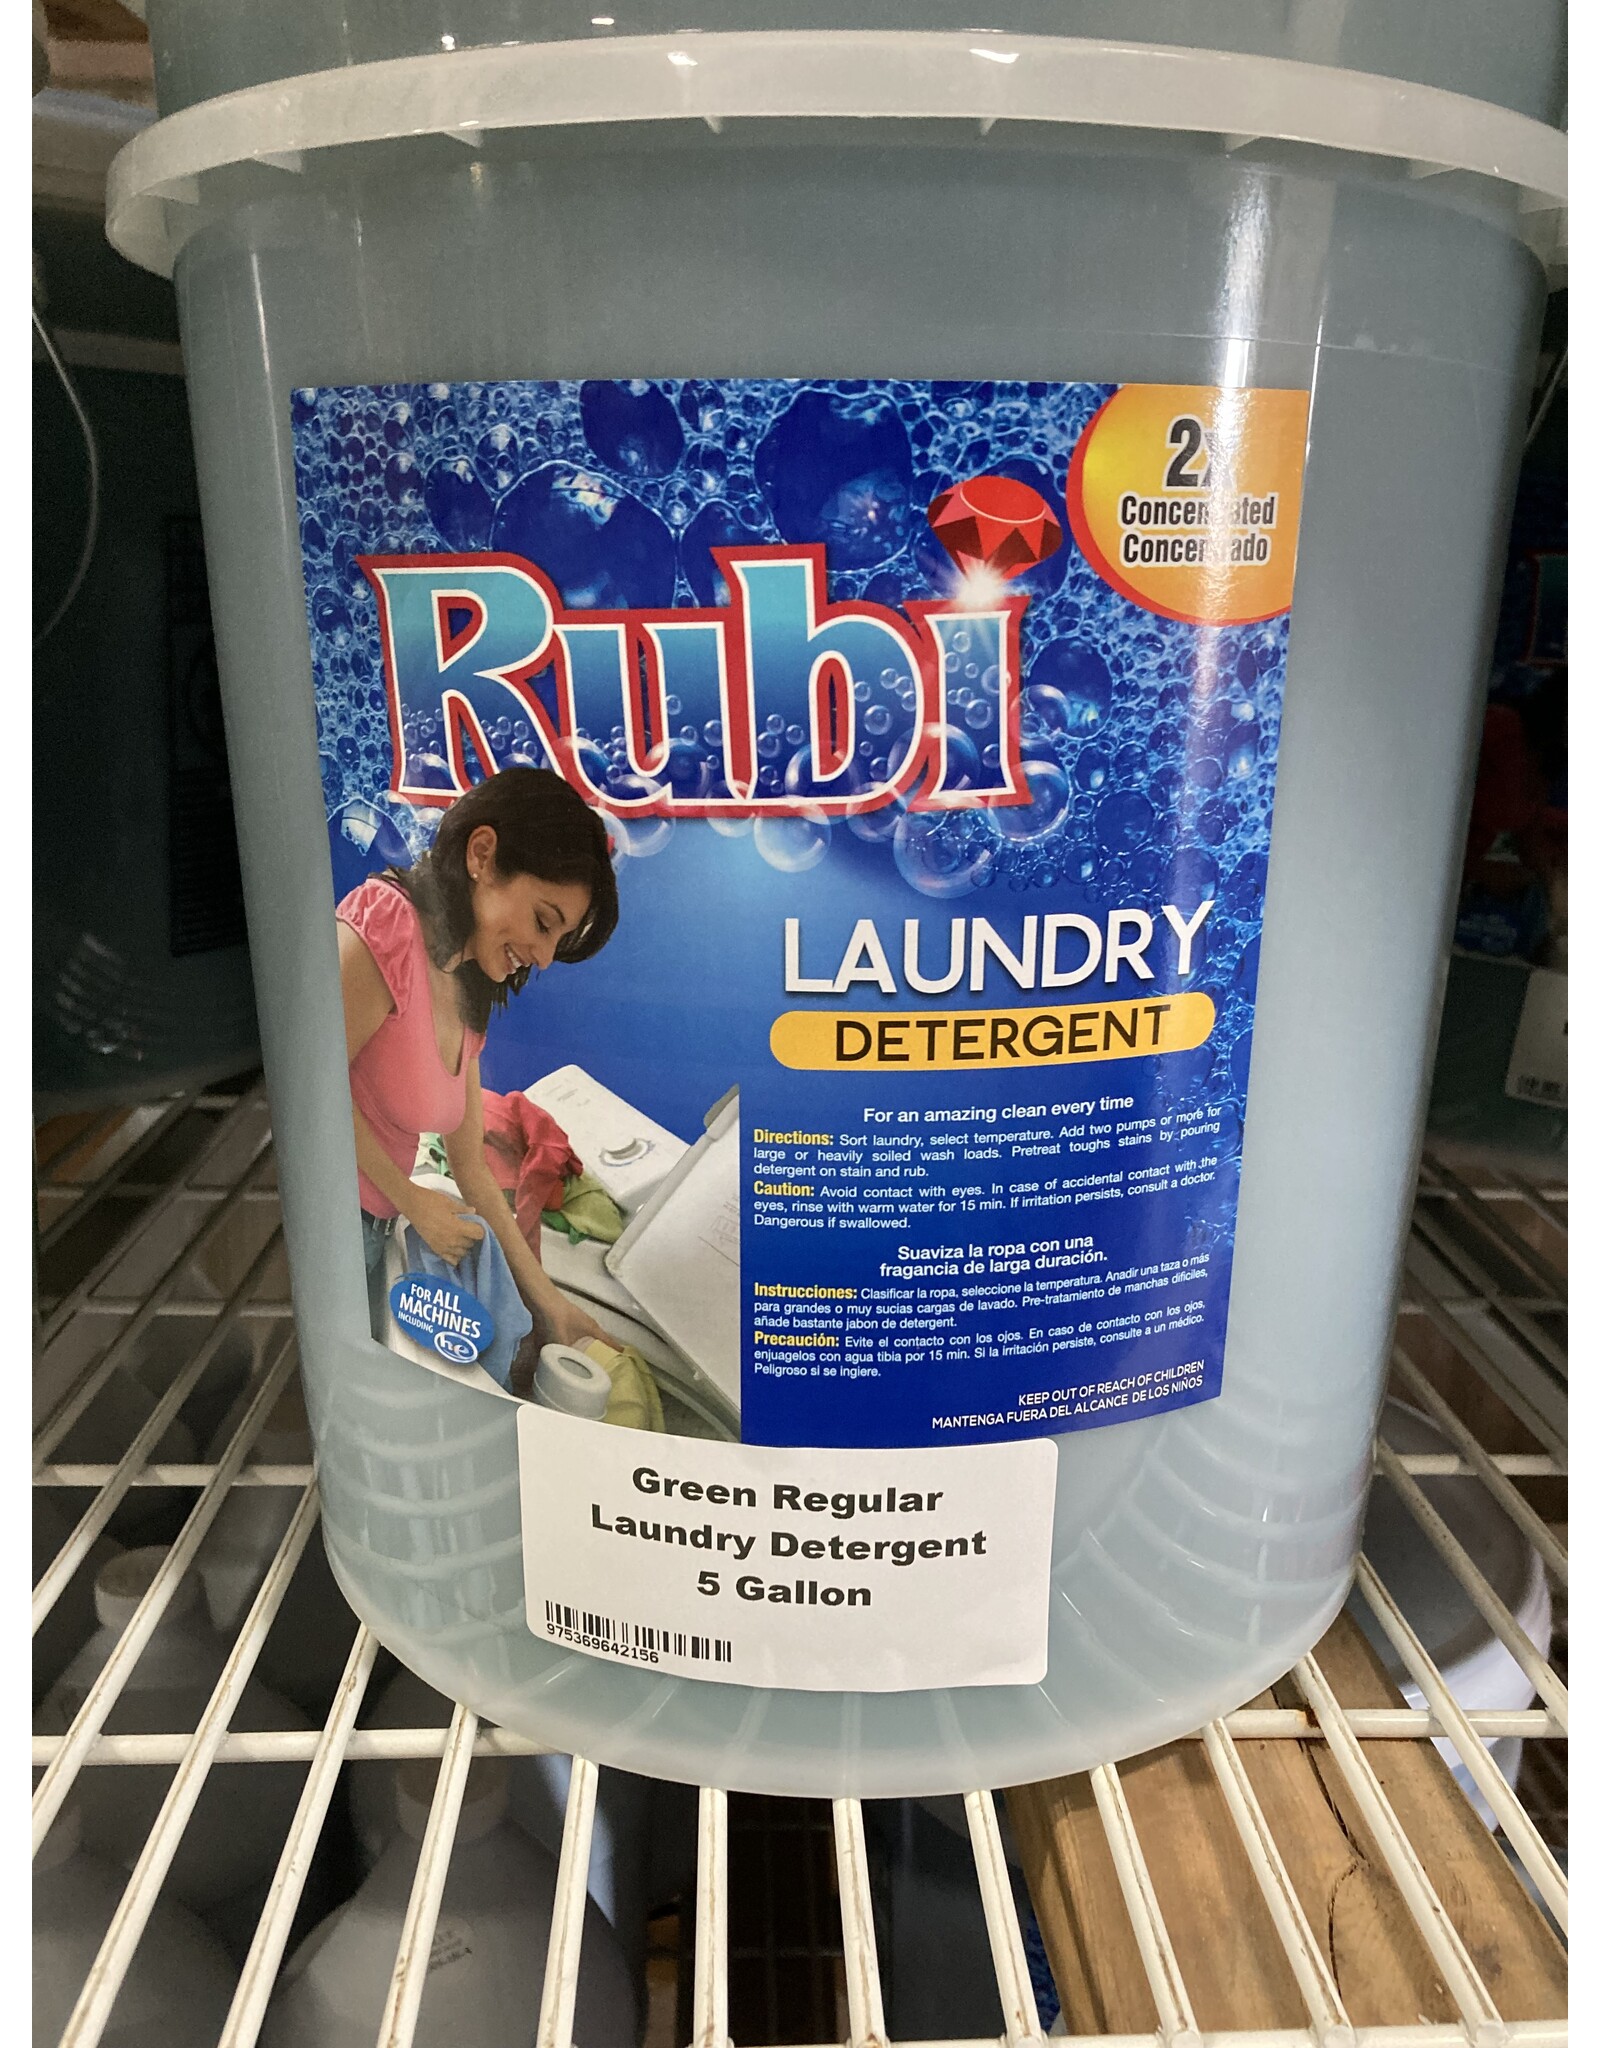 GNO Green Regular Laundry Detergent 5 gallon